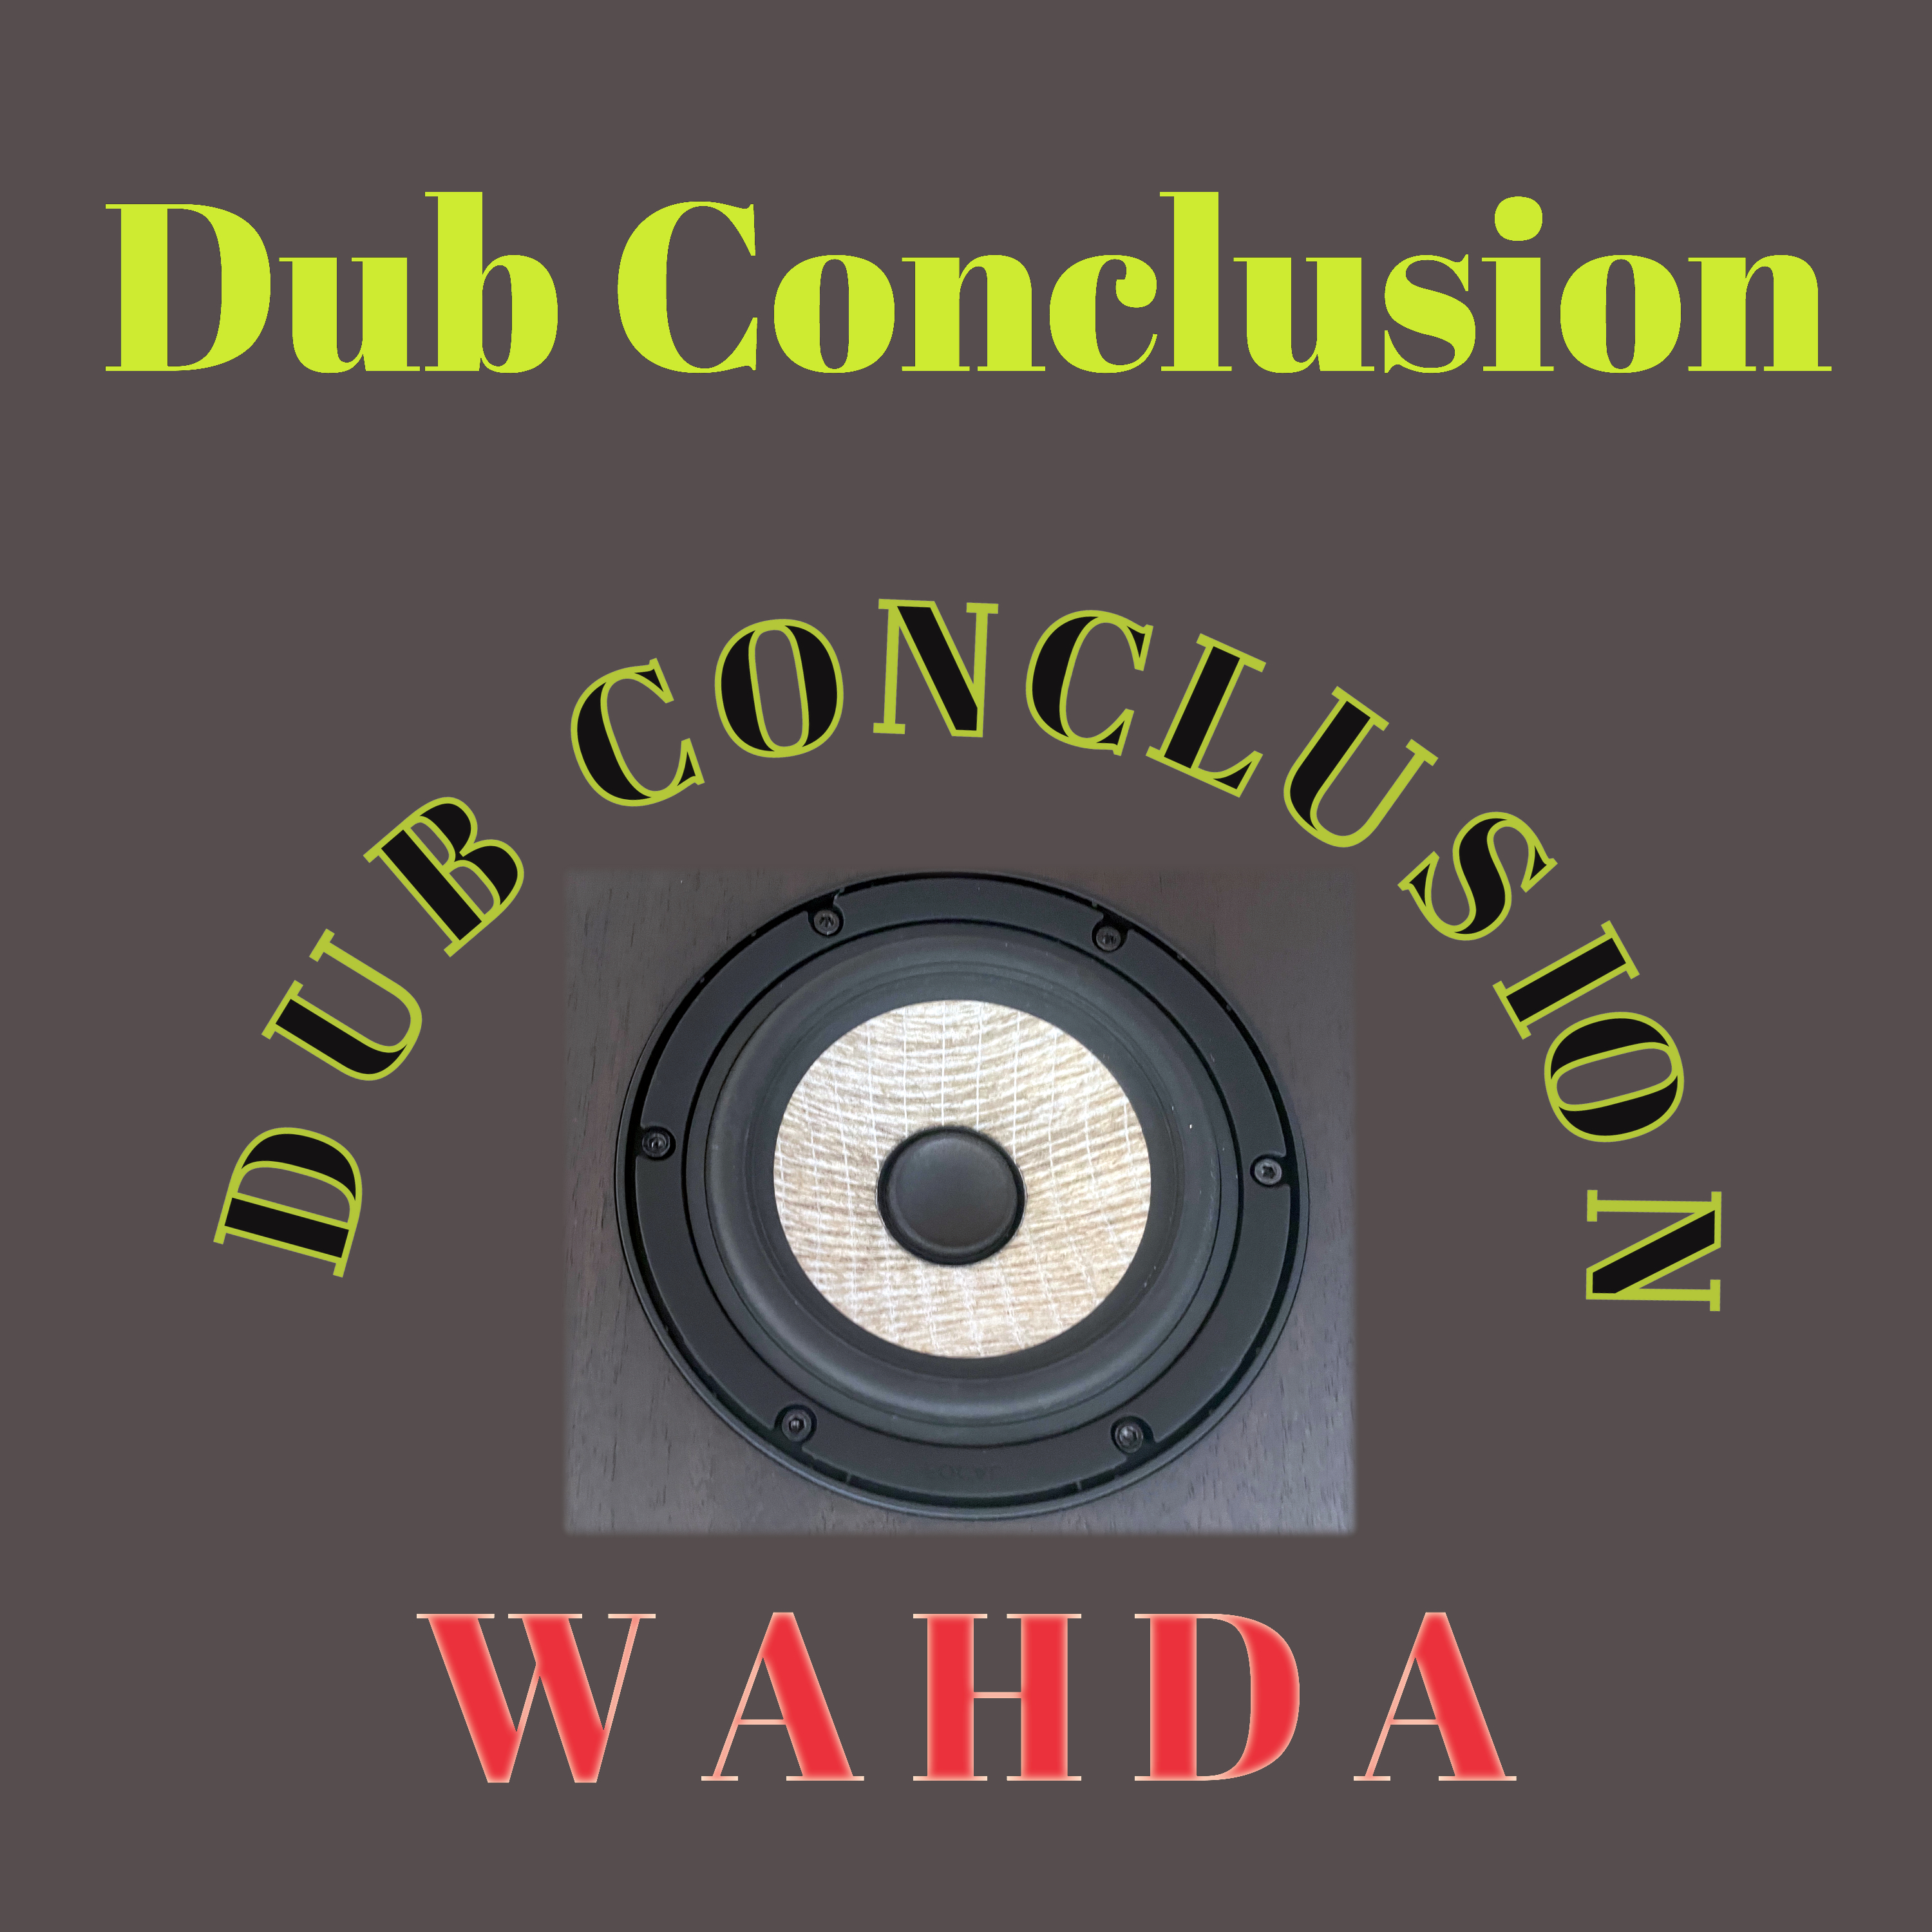 WAHDA - Dub Conclusion